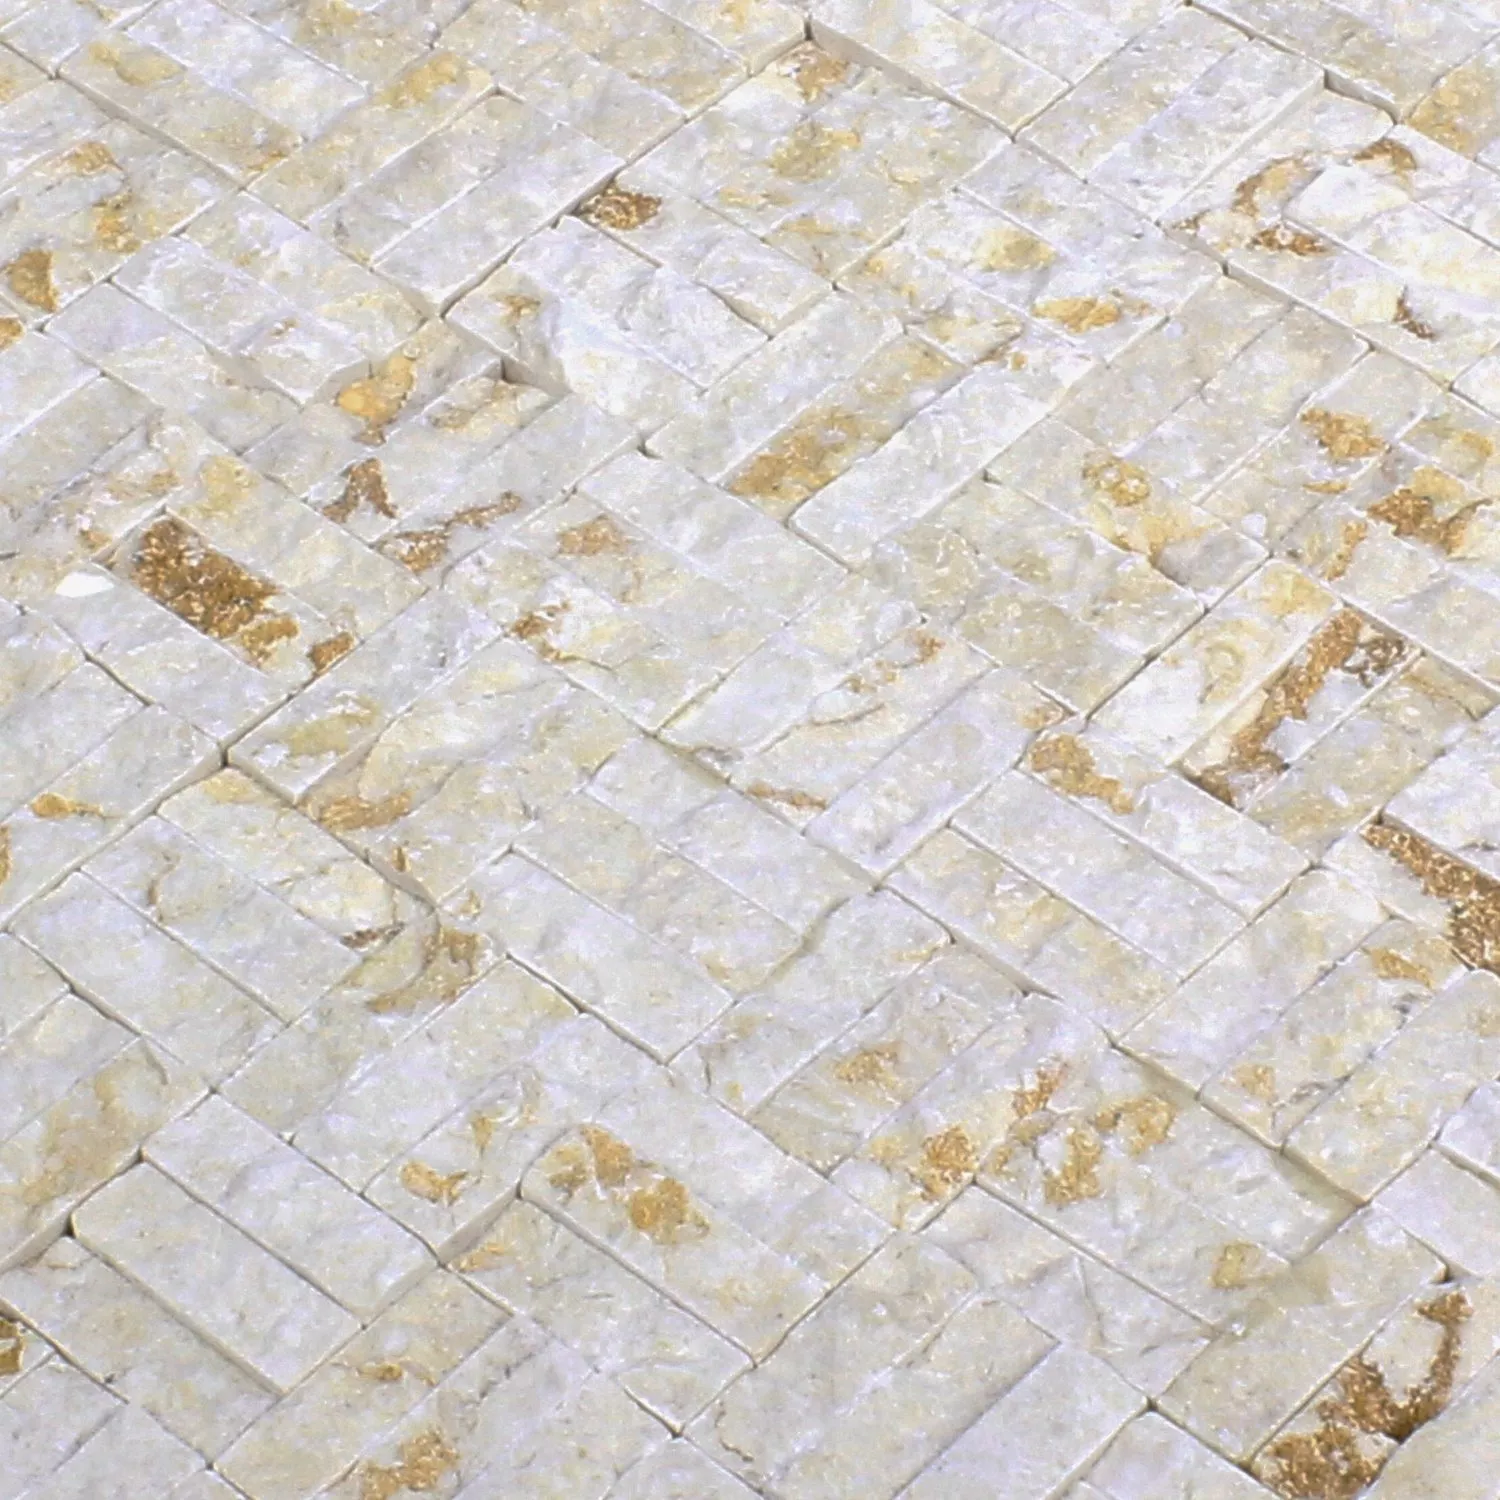 Sample Mosaic Tiles Natural Stone Parkett Splitface 3D Beige